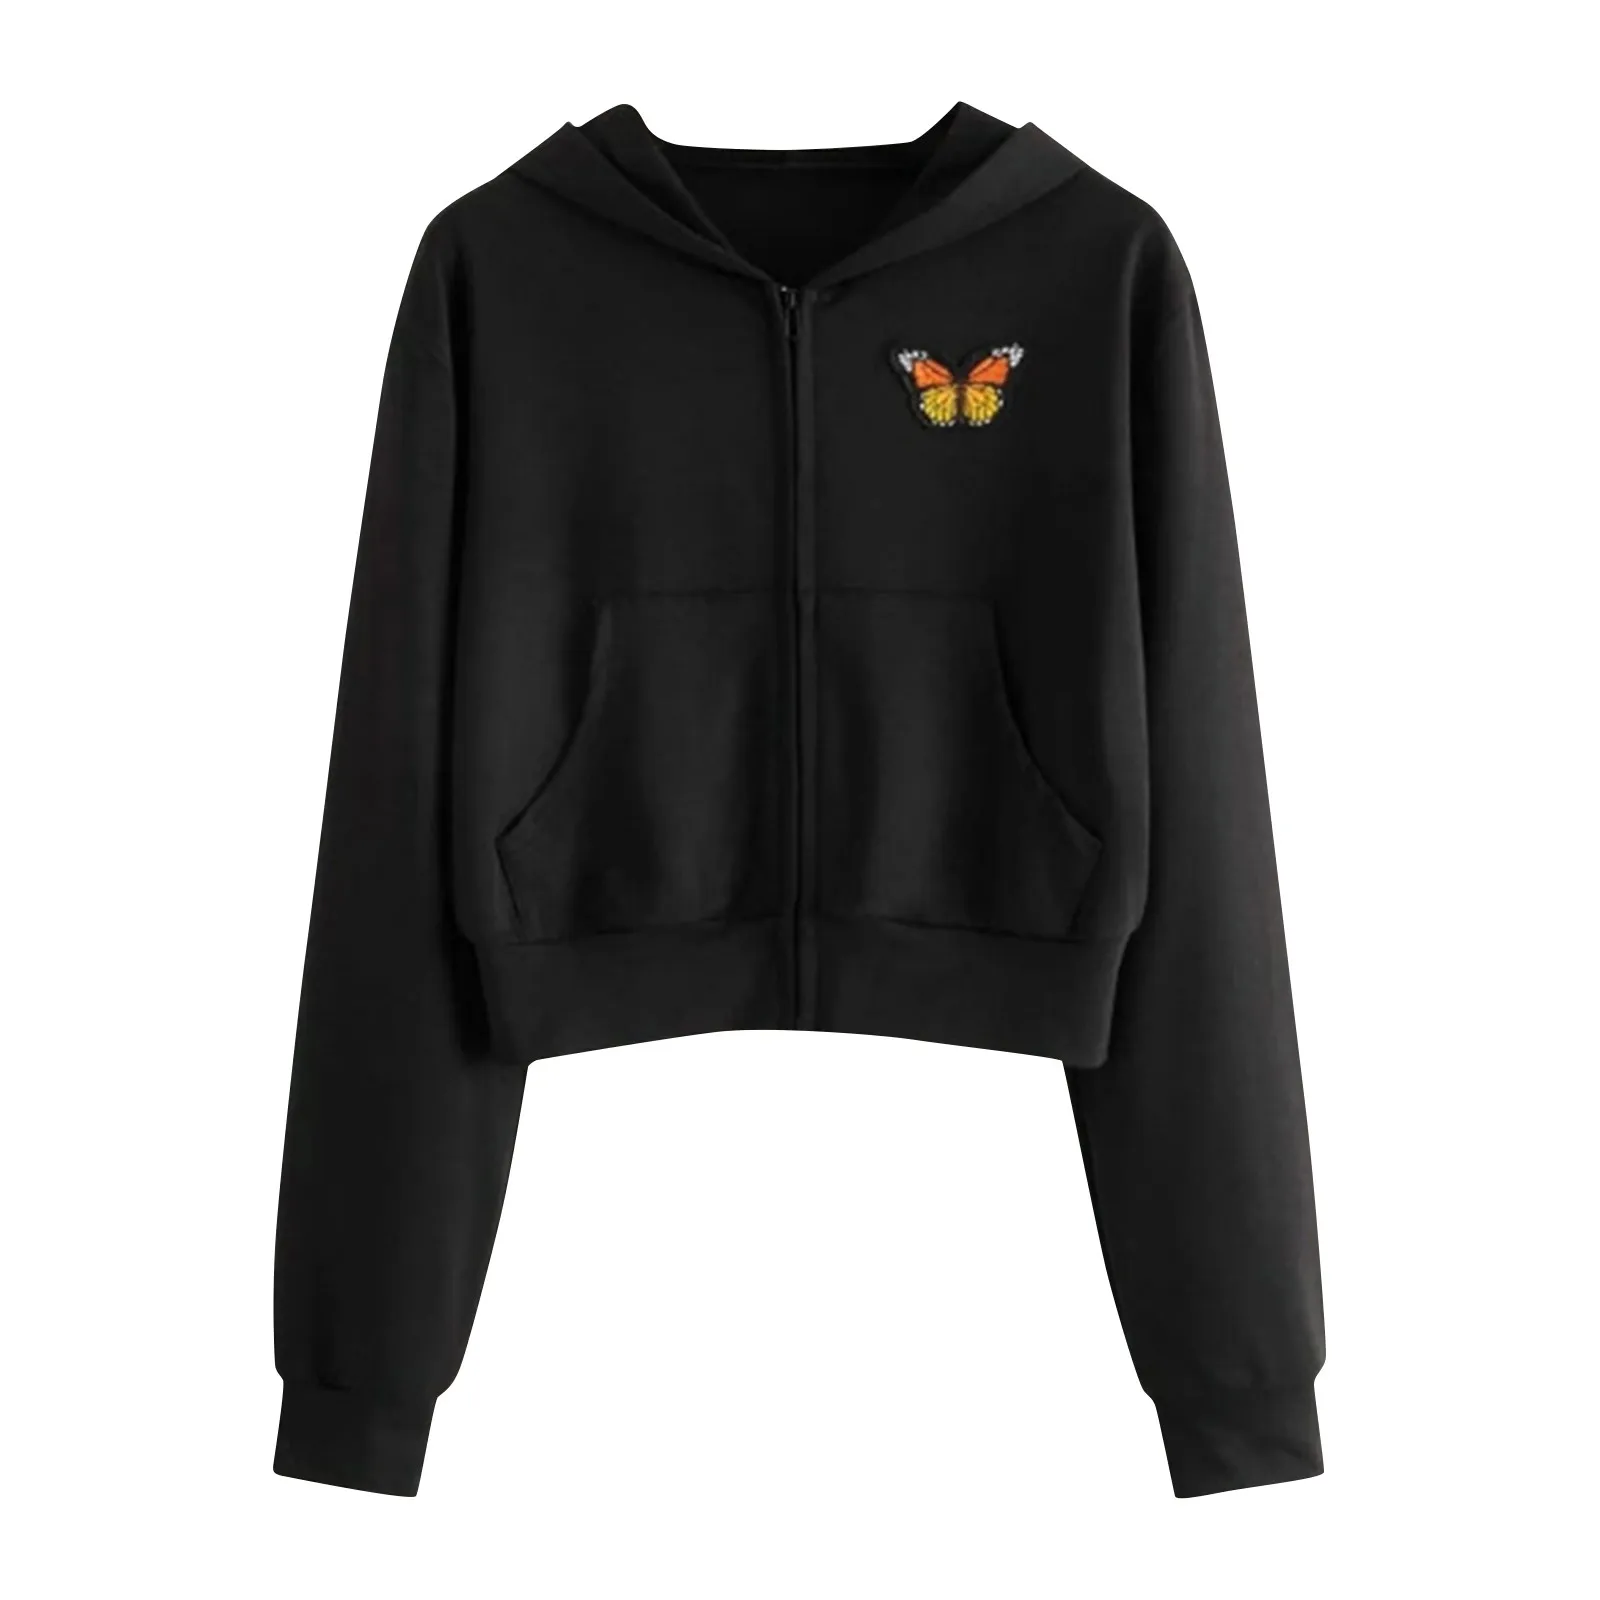 Drawstring Sweatshirt Hoodies Fashion Women Zip Autumn And Winter Long S... - $83.59